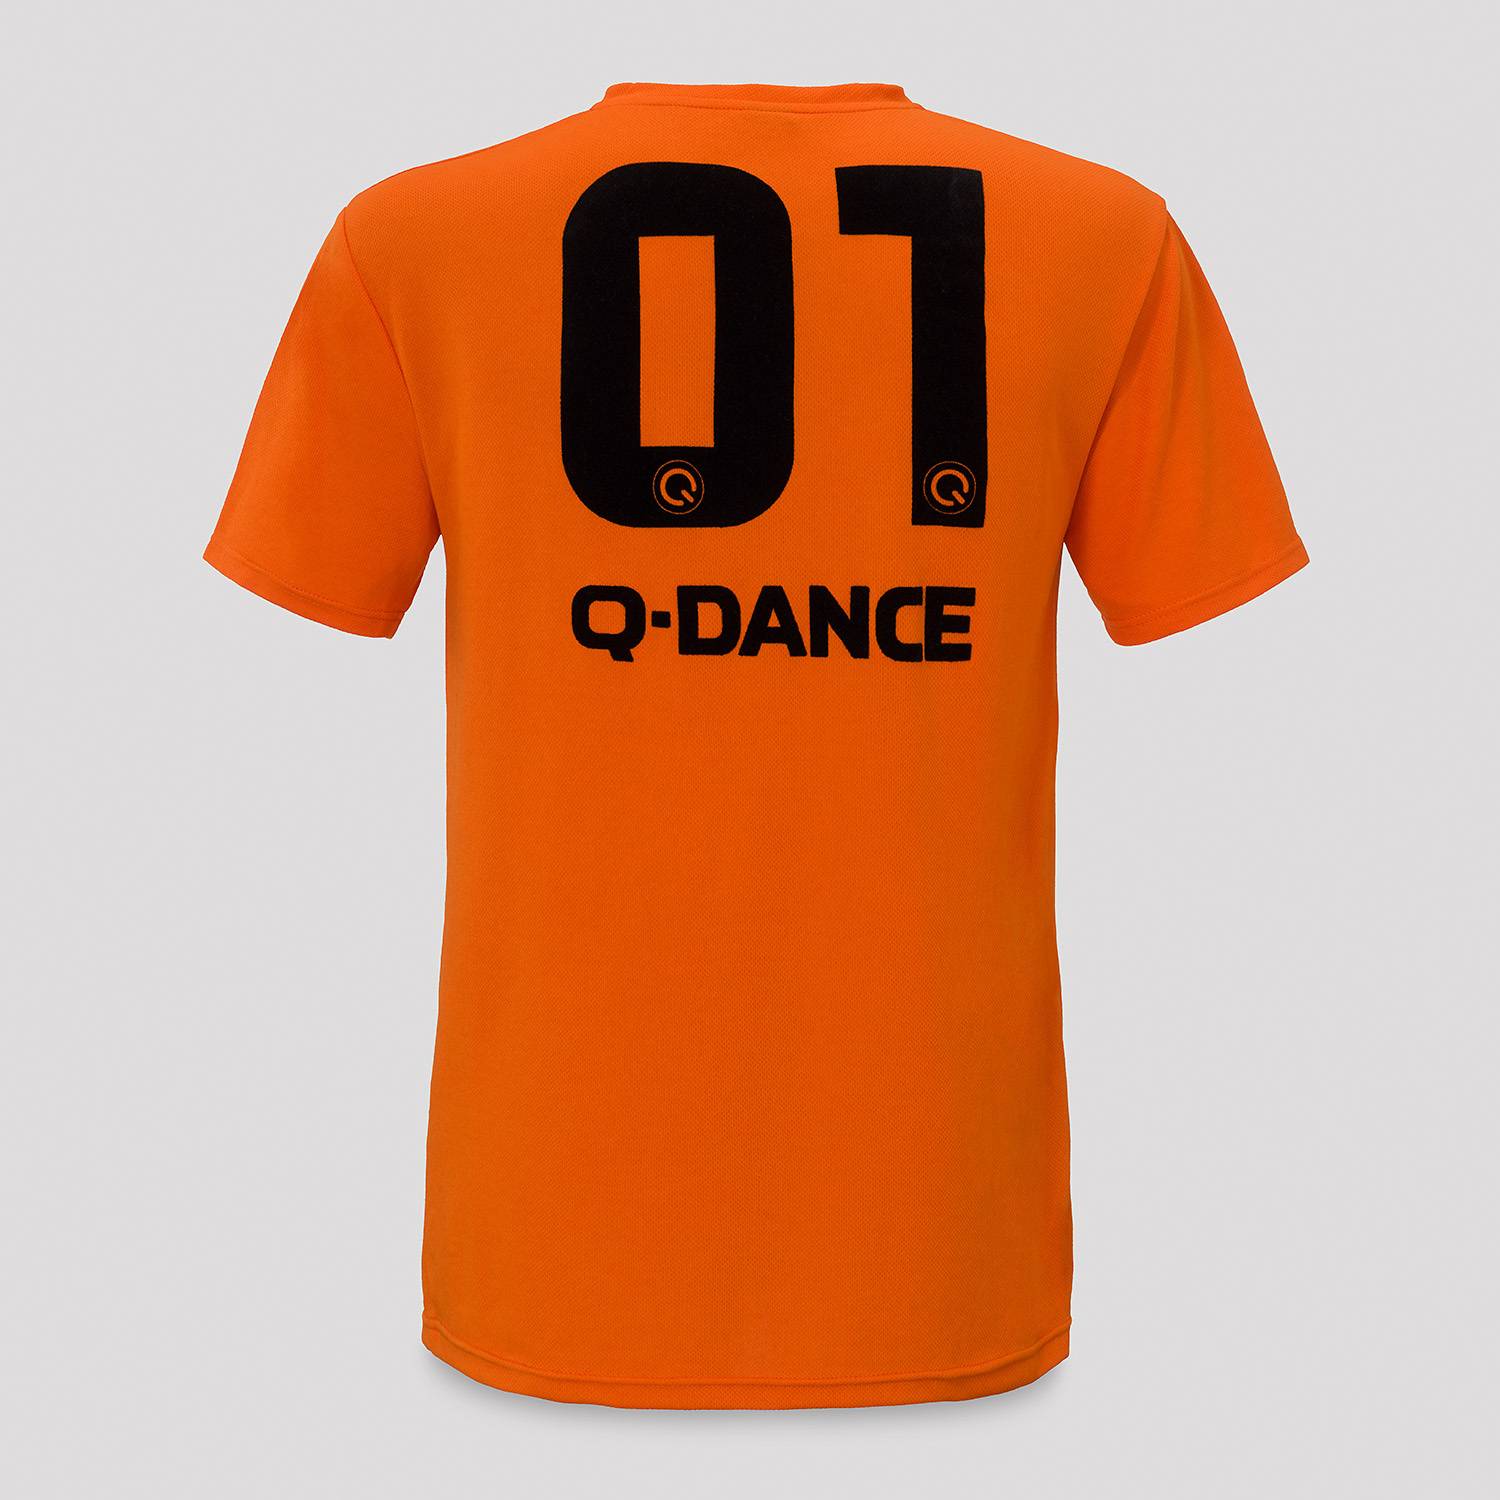 orange and black football jersey